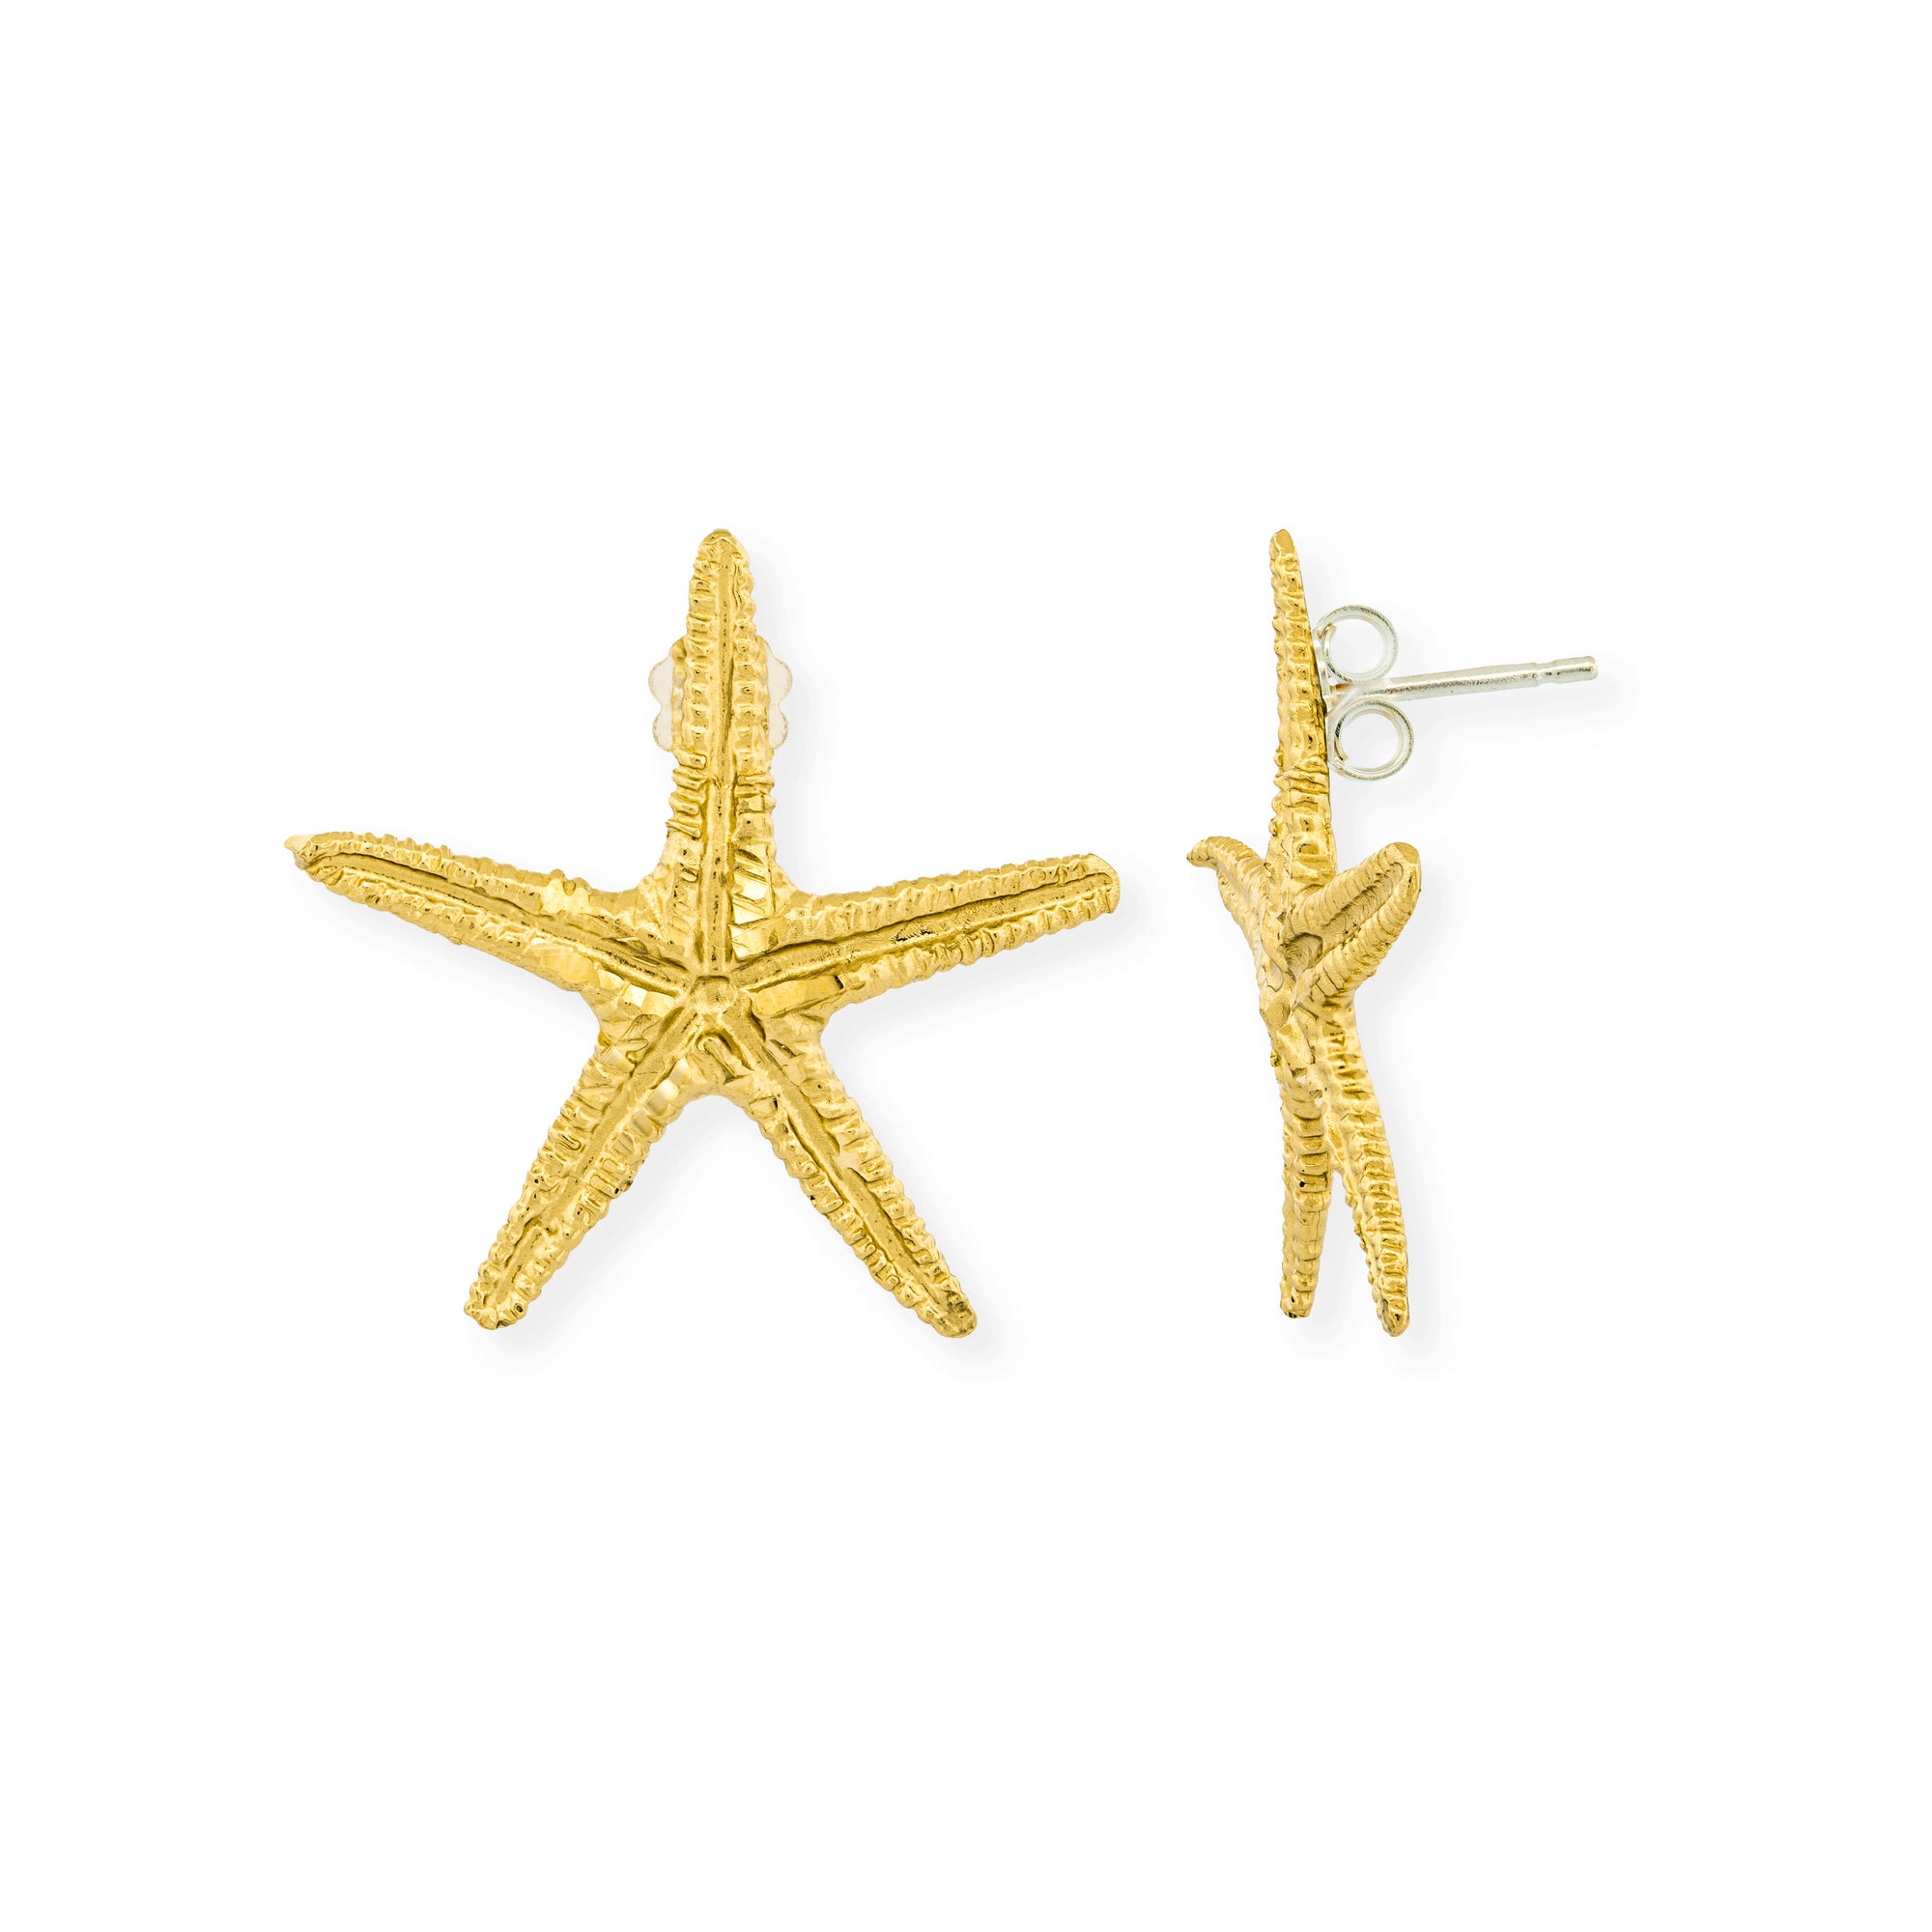 Handmade Gold Starfish Stud Earrings - Anthos Crafts